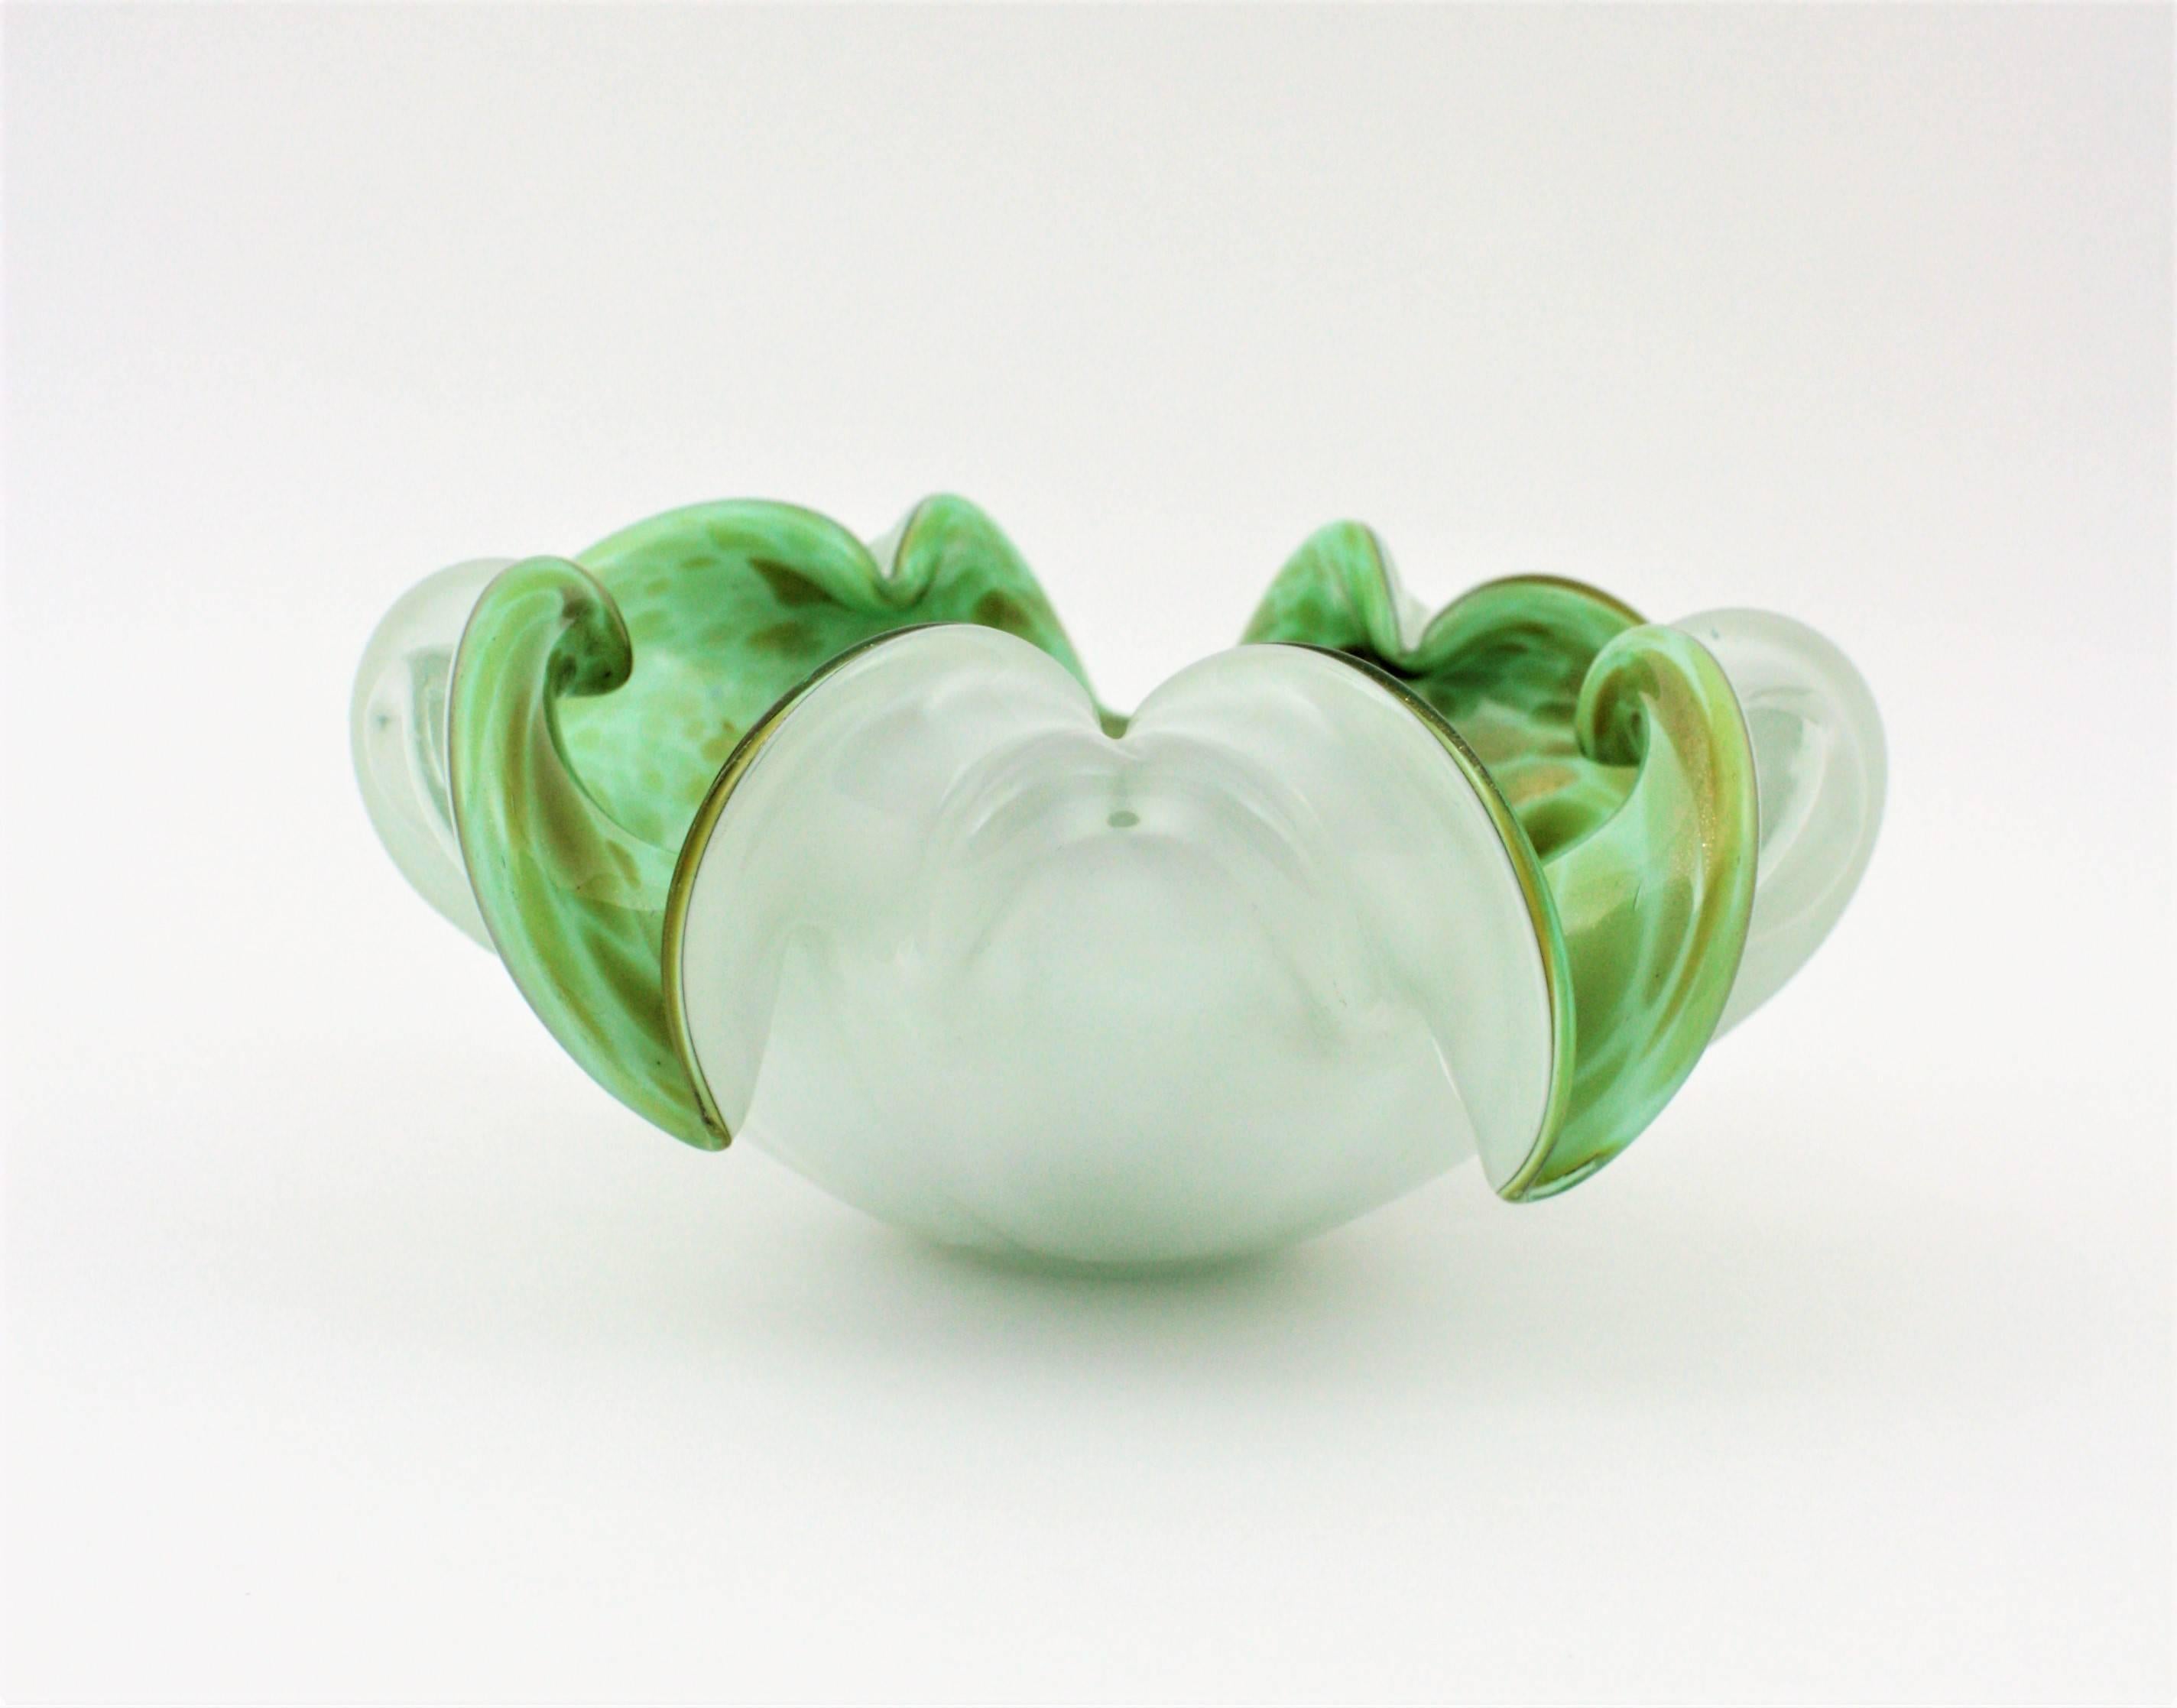 Fratelli Toso Murano Green White Art Glass Bowl with Copper Flecks, 1950s For Sale 3